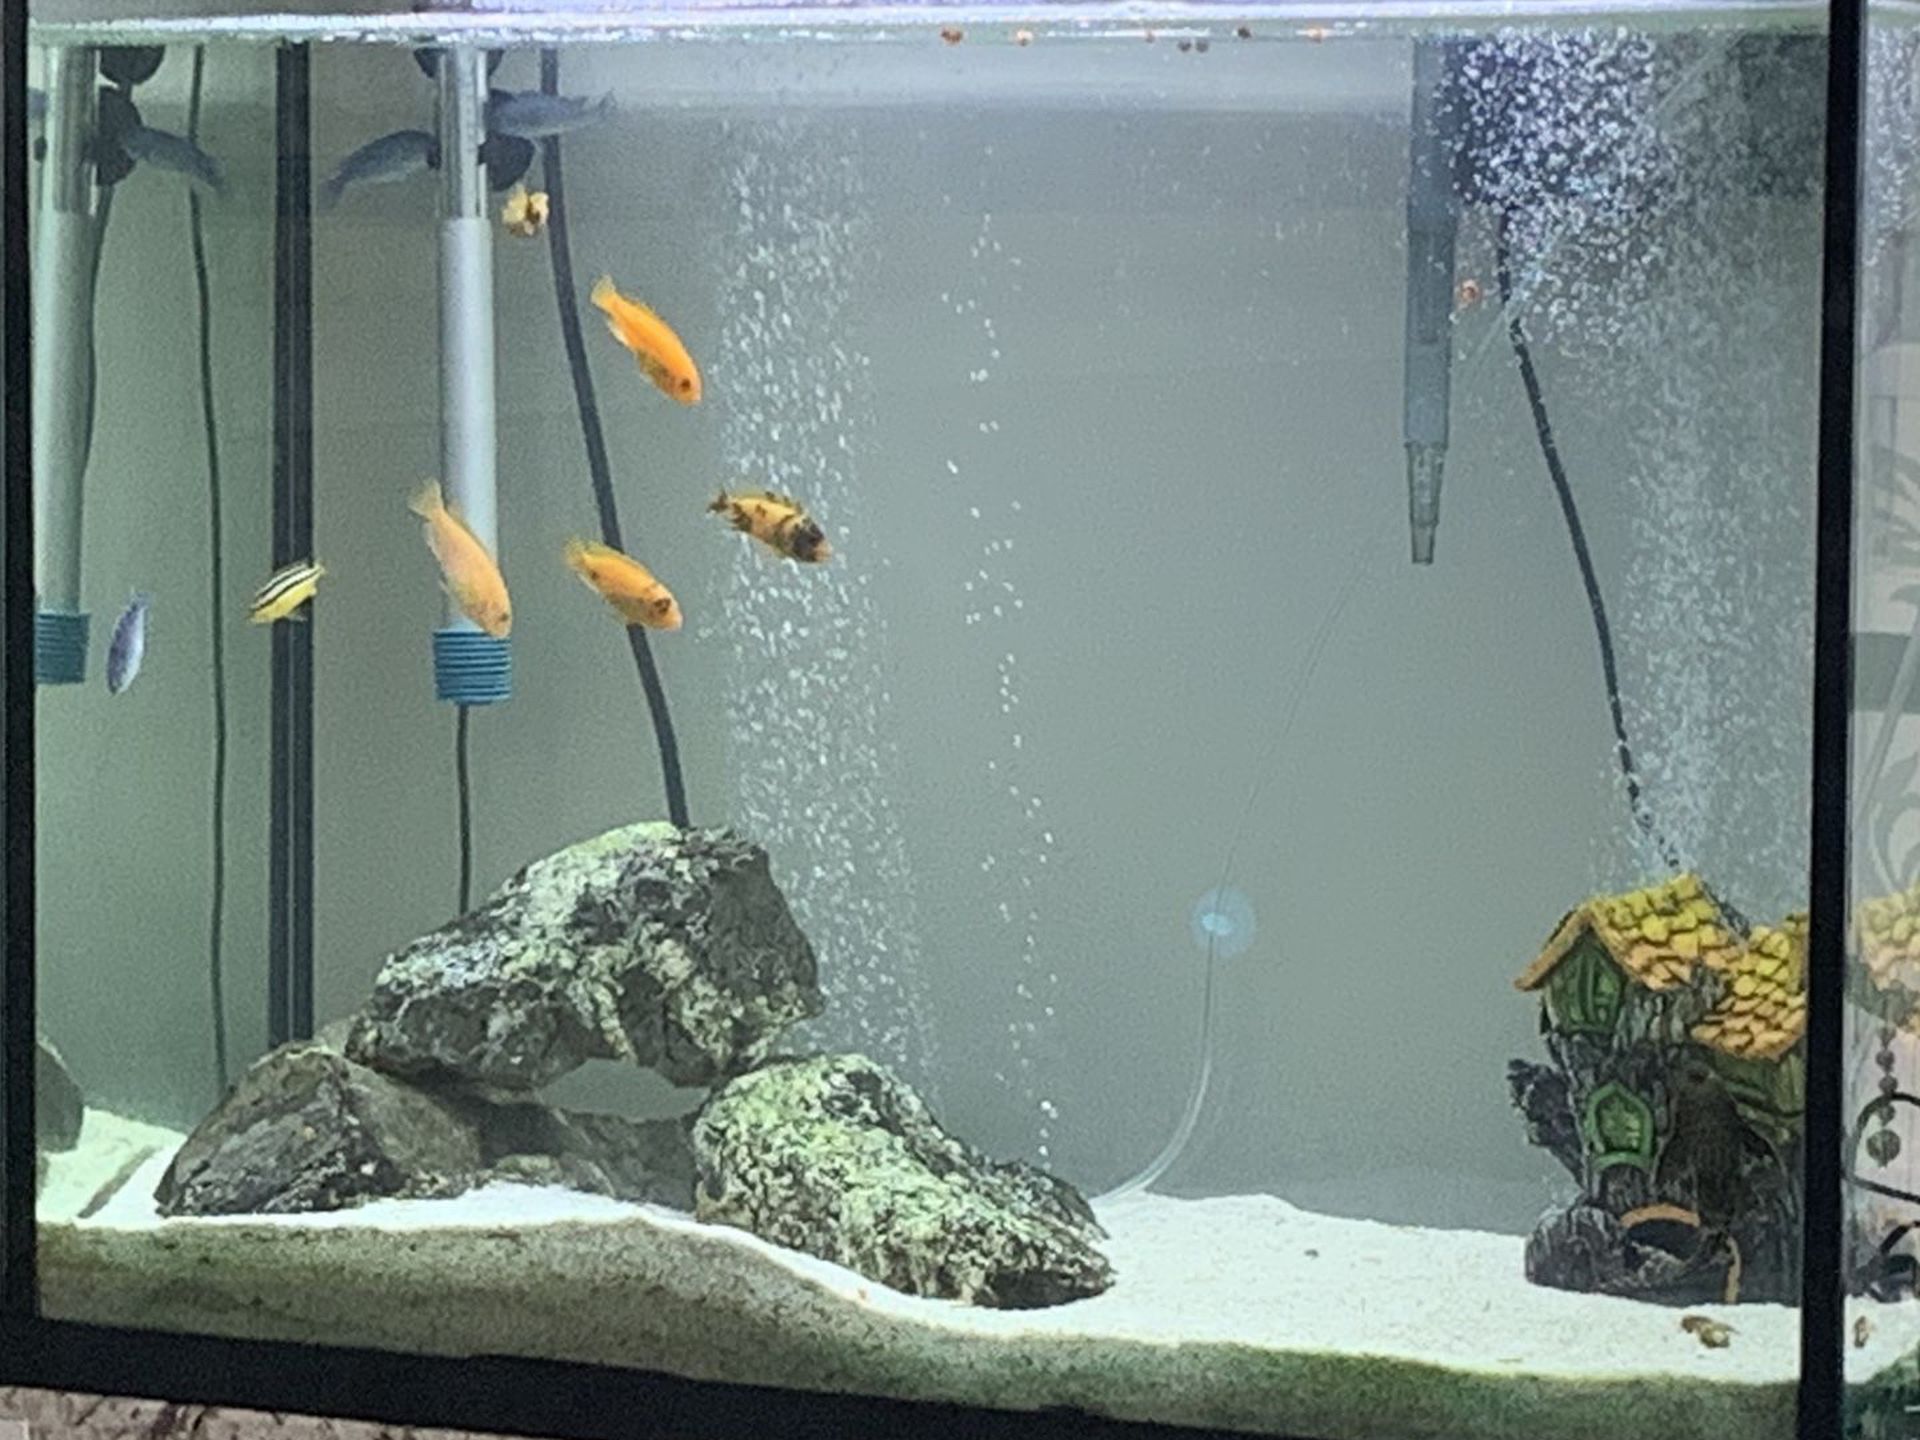 Aquarium Tank with Fish and Supplies